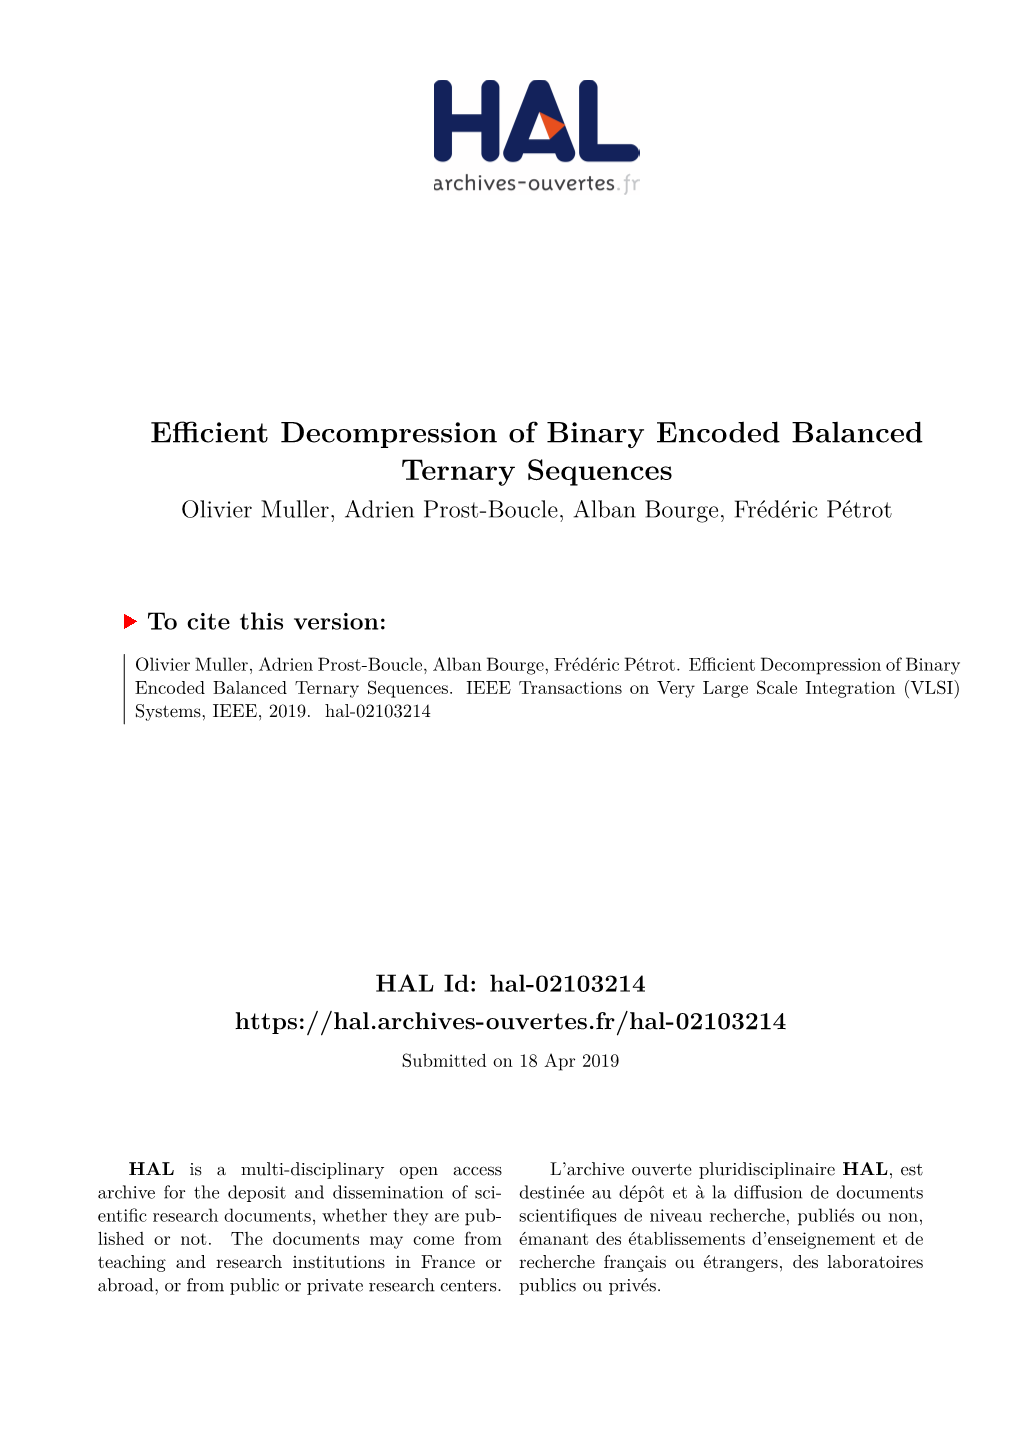 Efficient Decompression of Binary Encoded Balanced Ternary